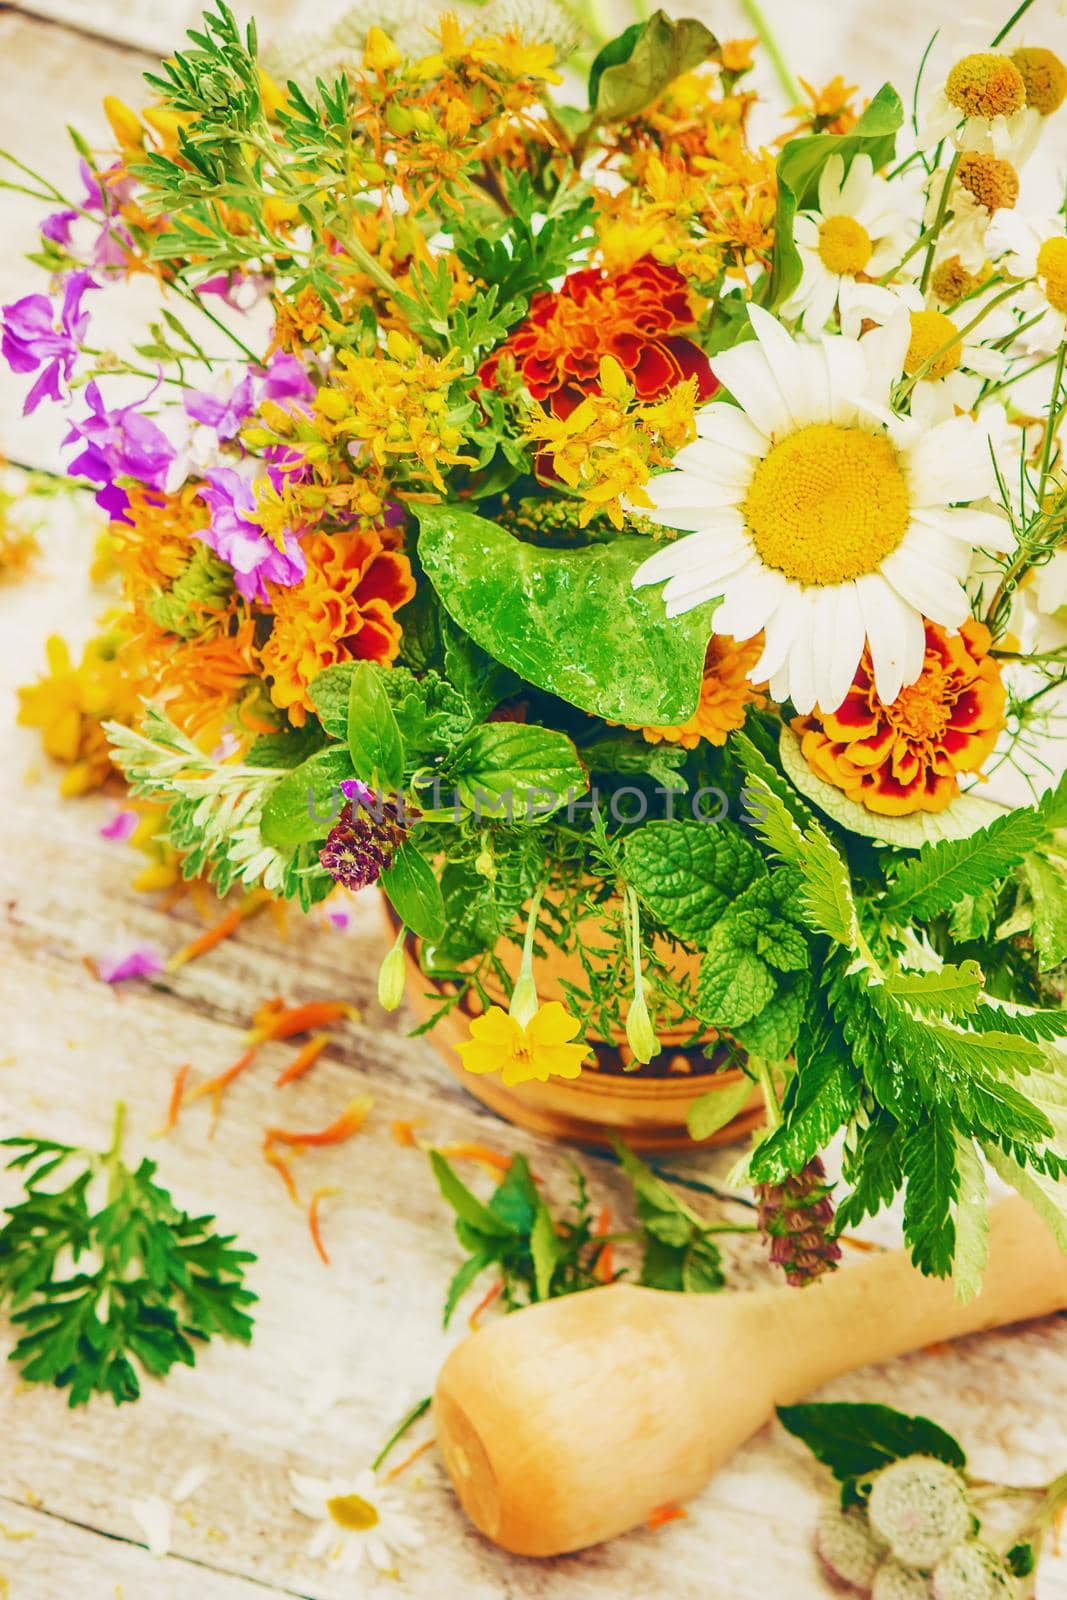 Herbs in a mortar. Medicinal plants. Selective focus. by yanadjana